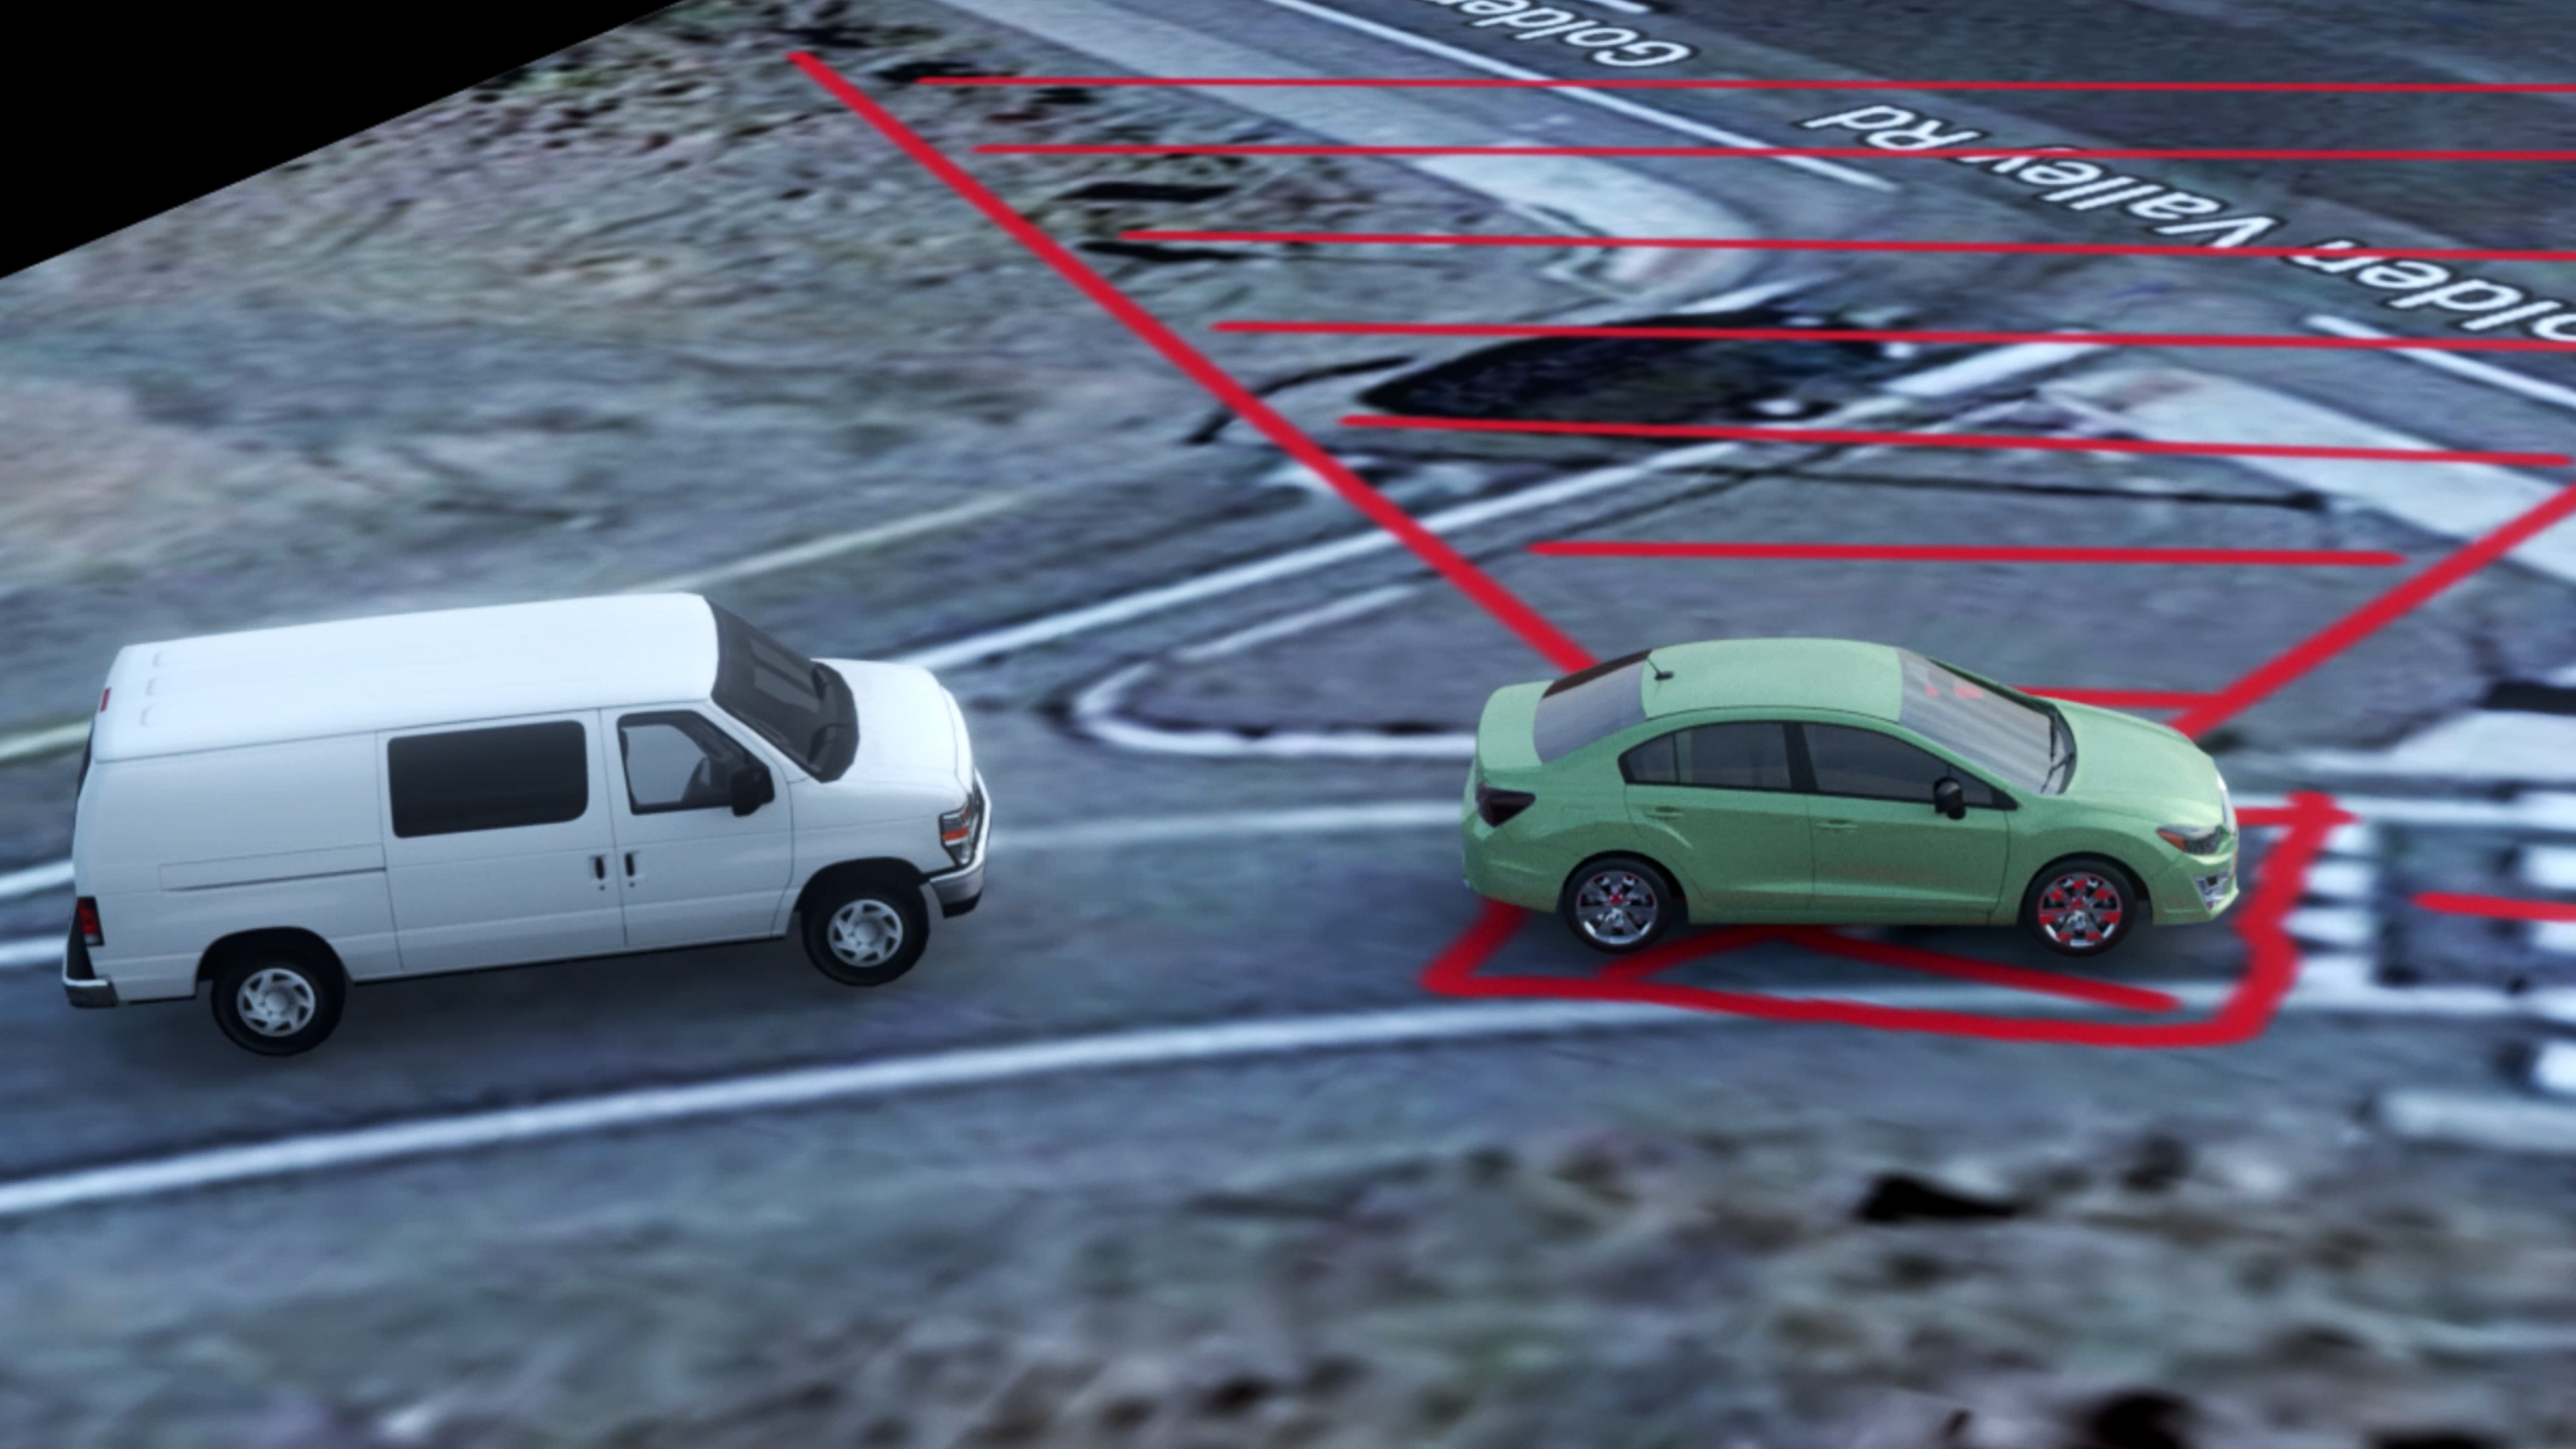 Accident Simulation Image